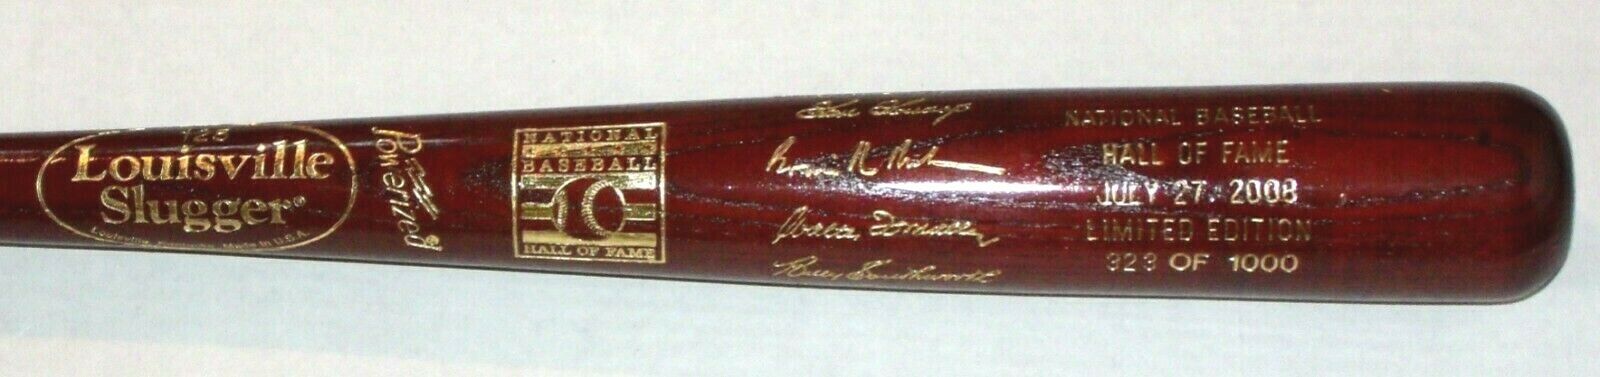 2008 Baseball Hall Of Fame Induction Class Commemorative Bat